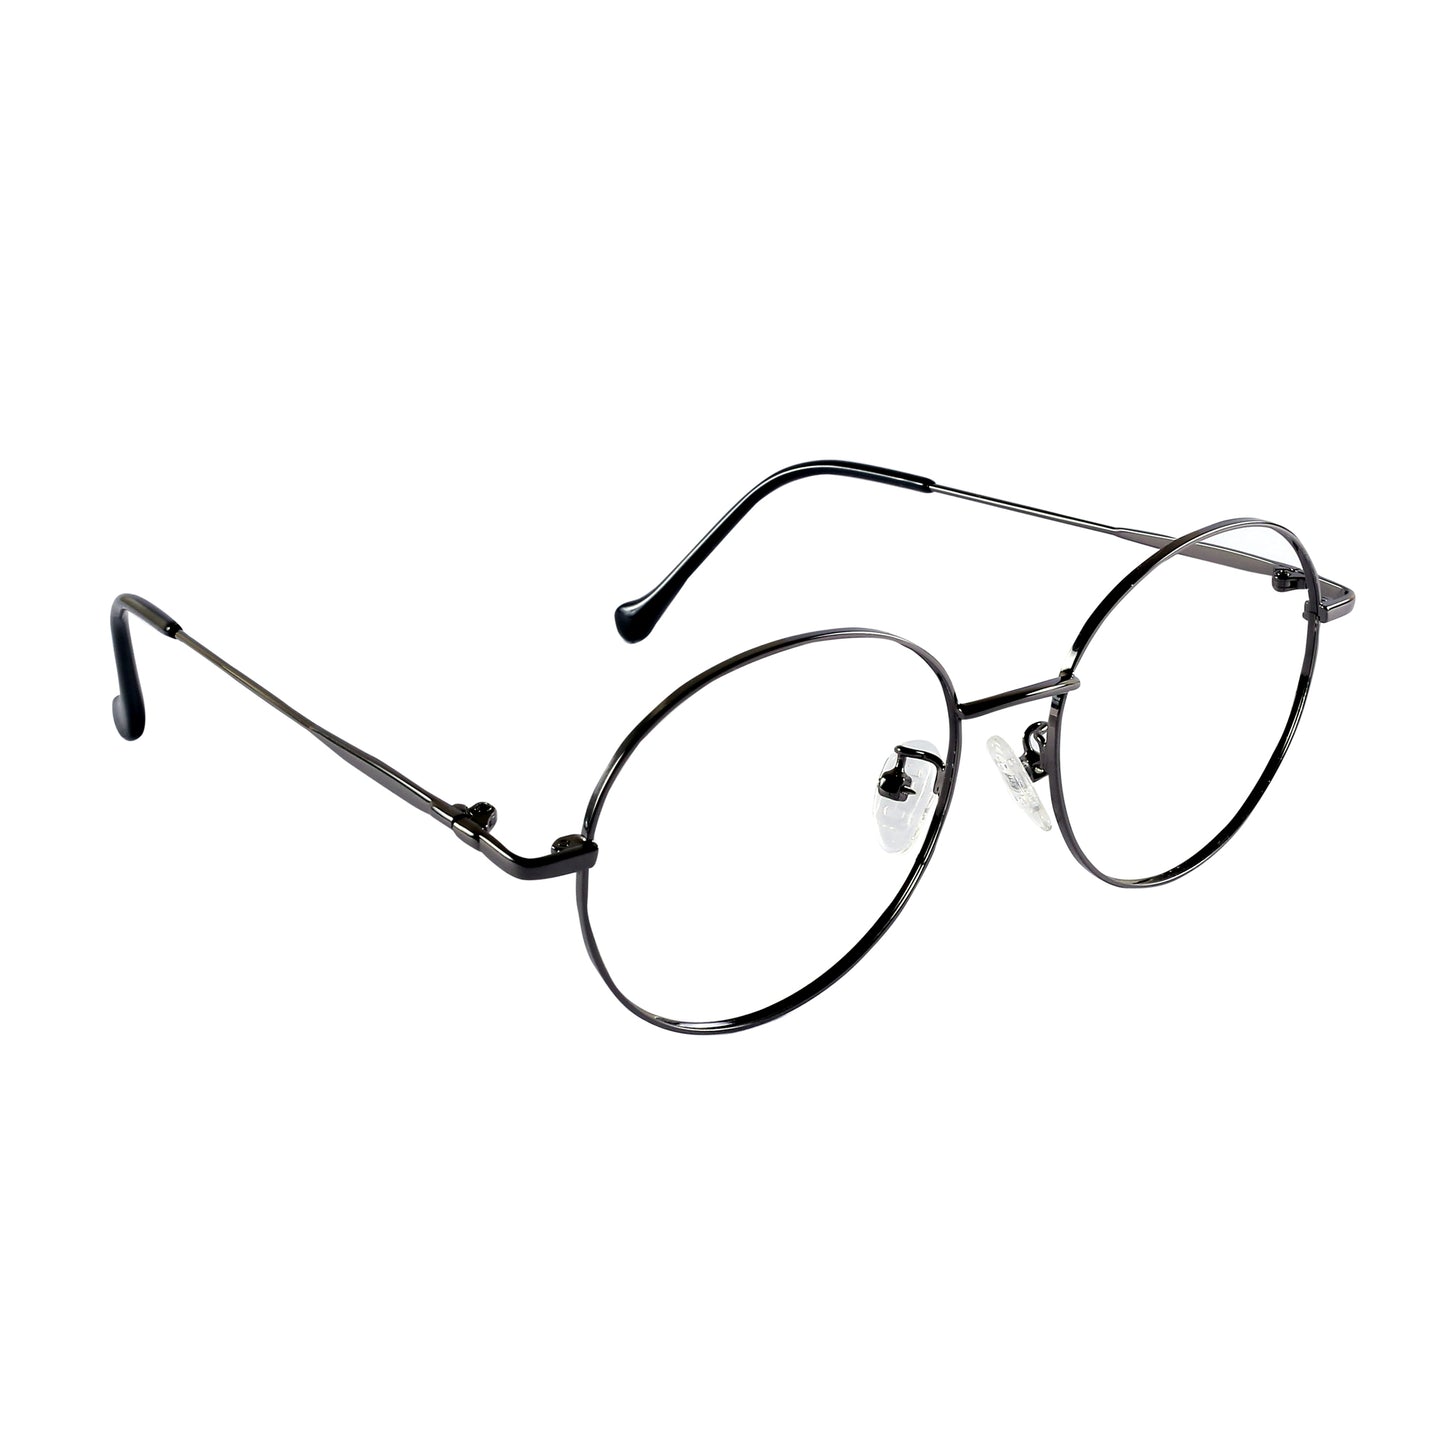 Loscomun Computer Glasses Silver Round Eyeglasses